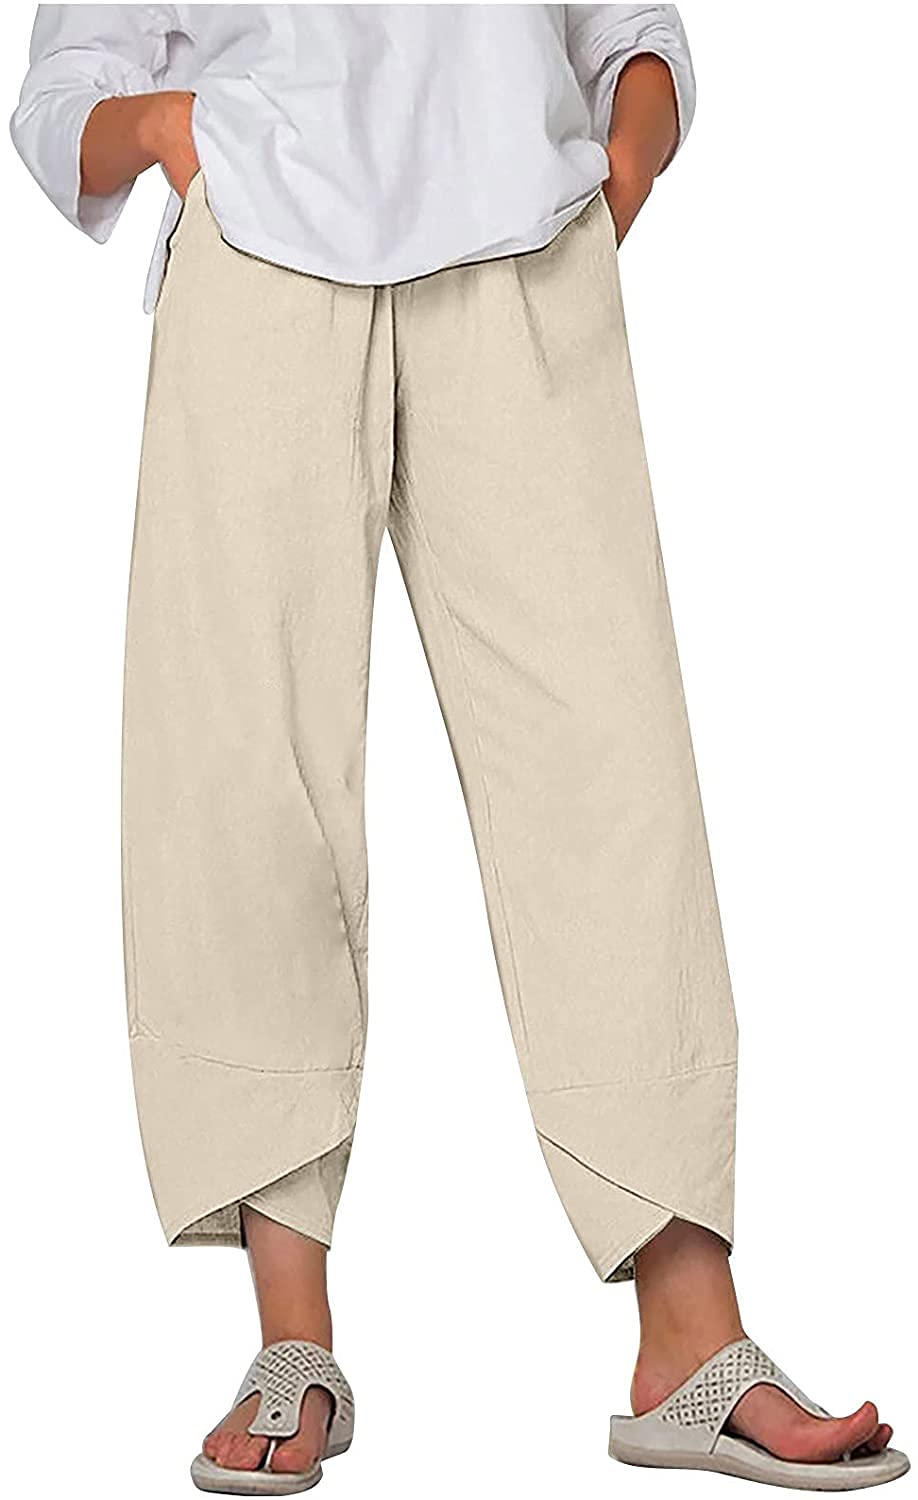  Linen Pants for Women Summer Capris with Pocket